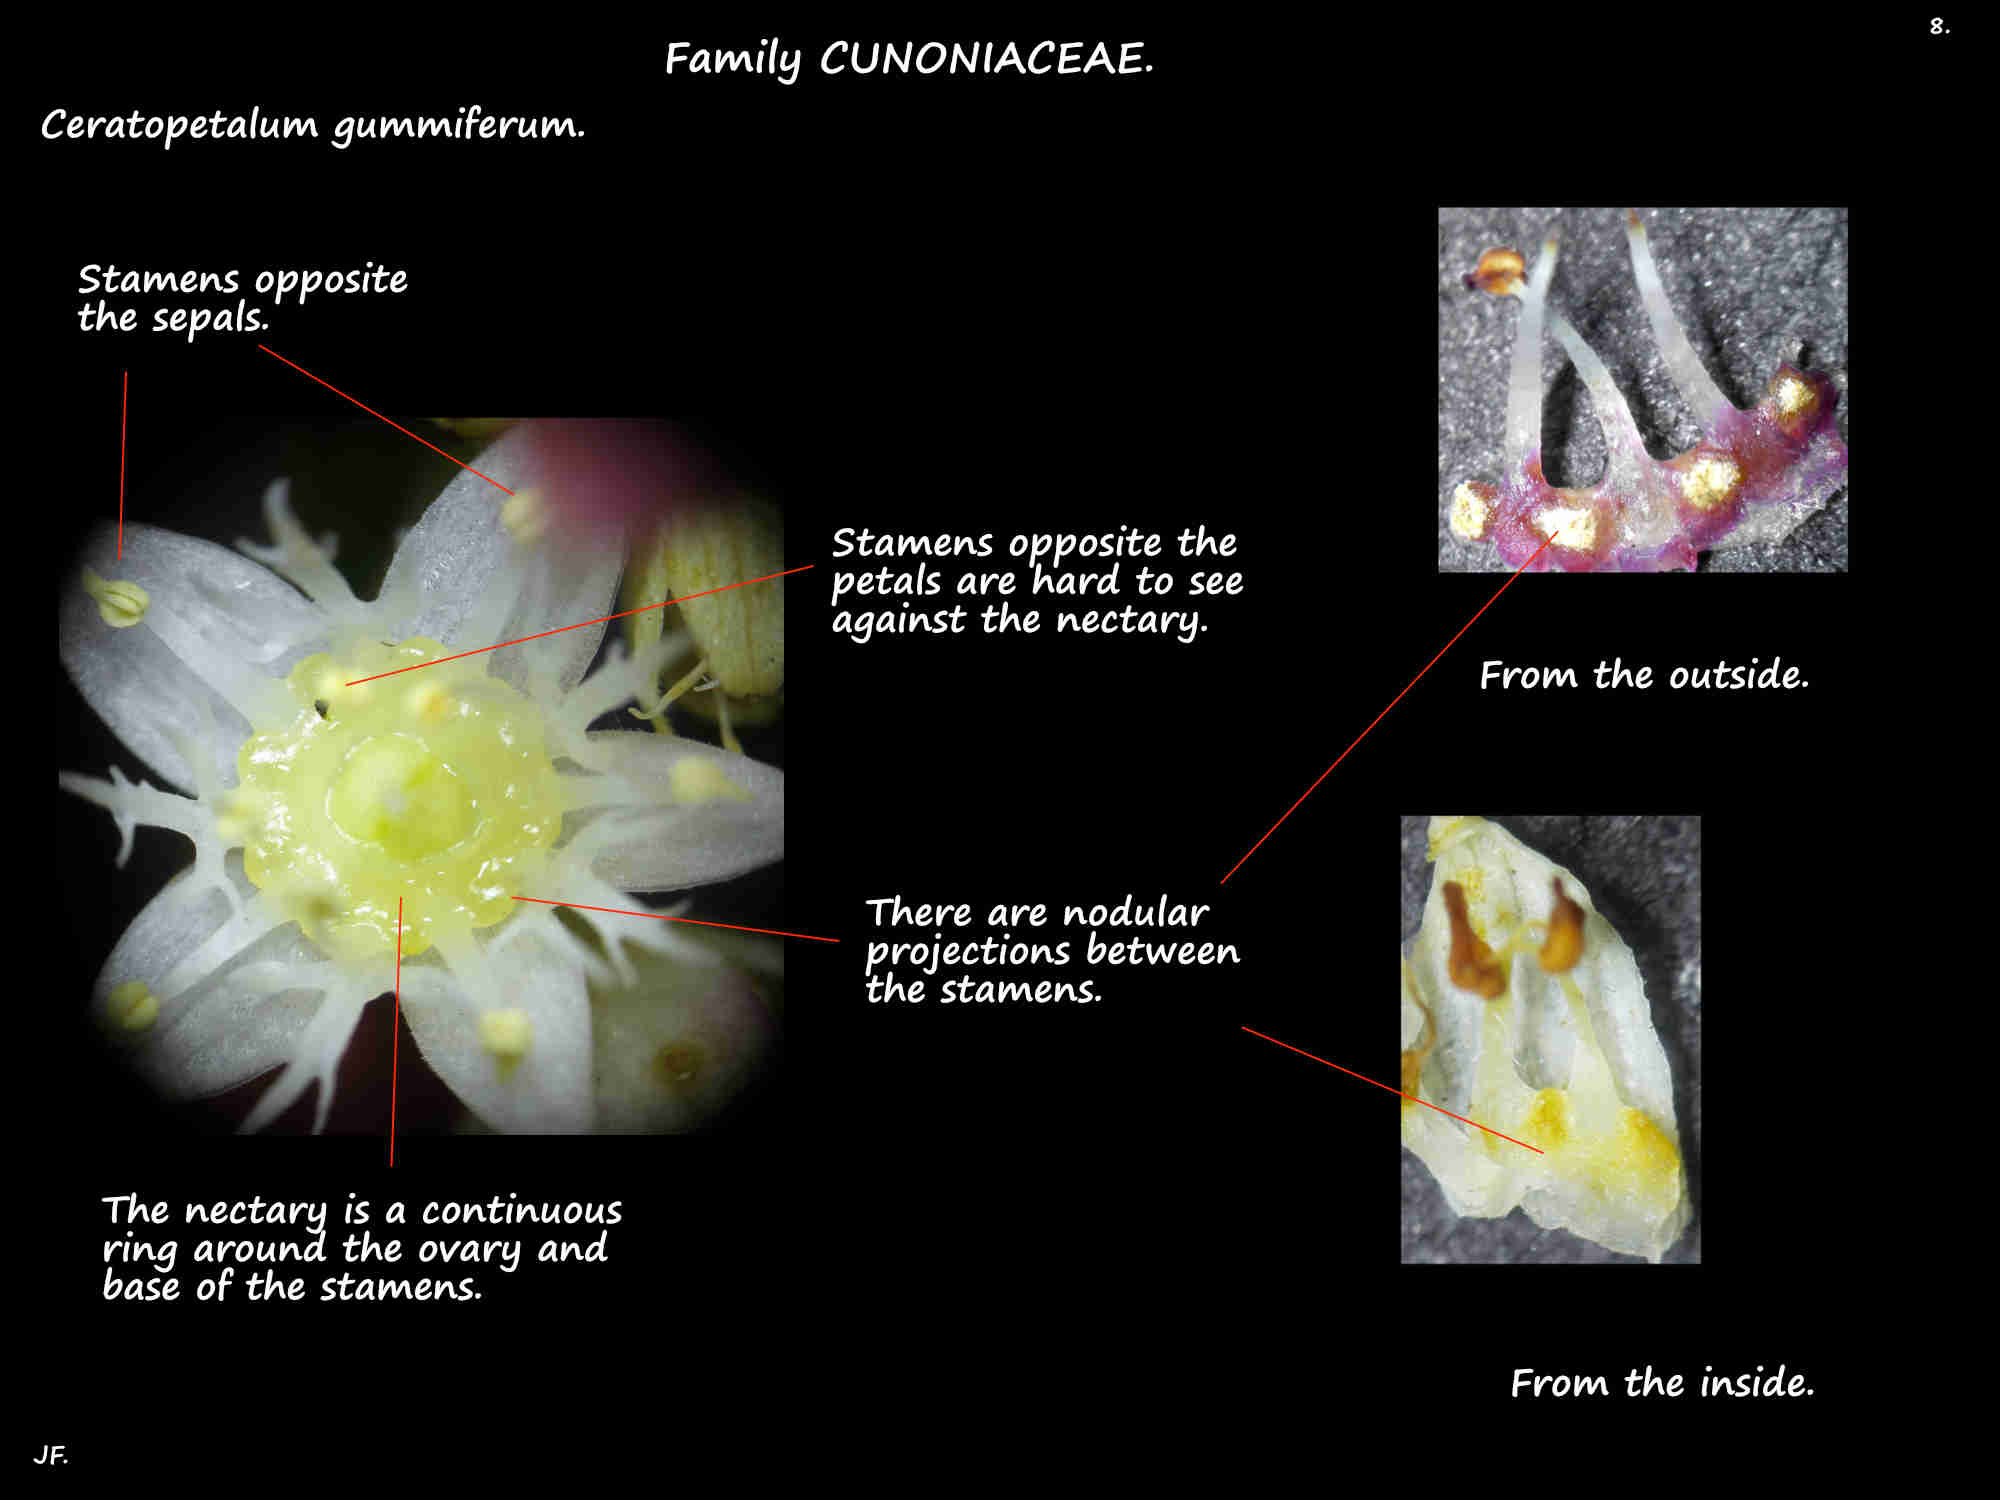 8 The nectary of Ceratopetalum gummiferum flowers